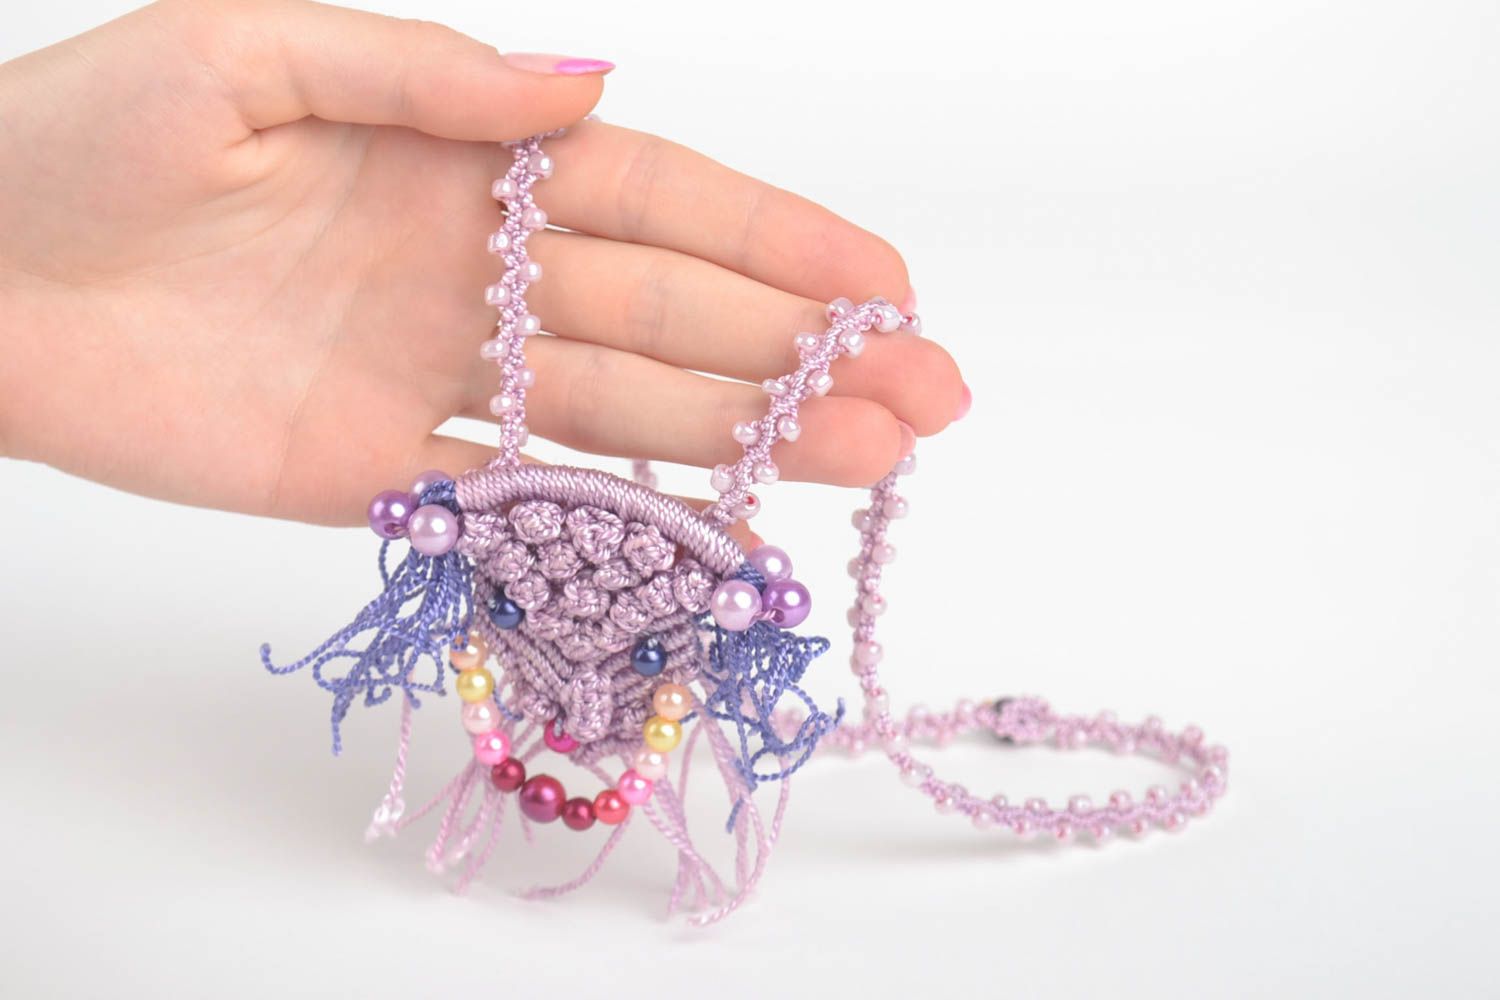 Handmade pendant designer pendant macrame pendant unusual jewelry gift ideas photo 5